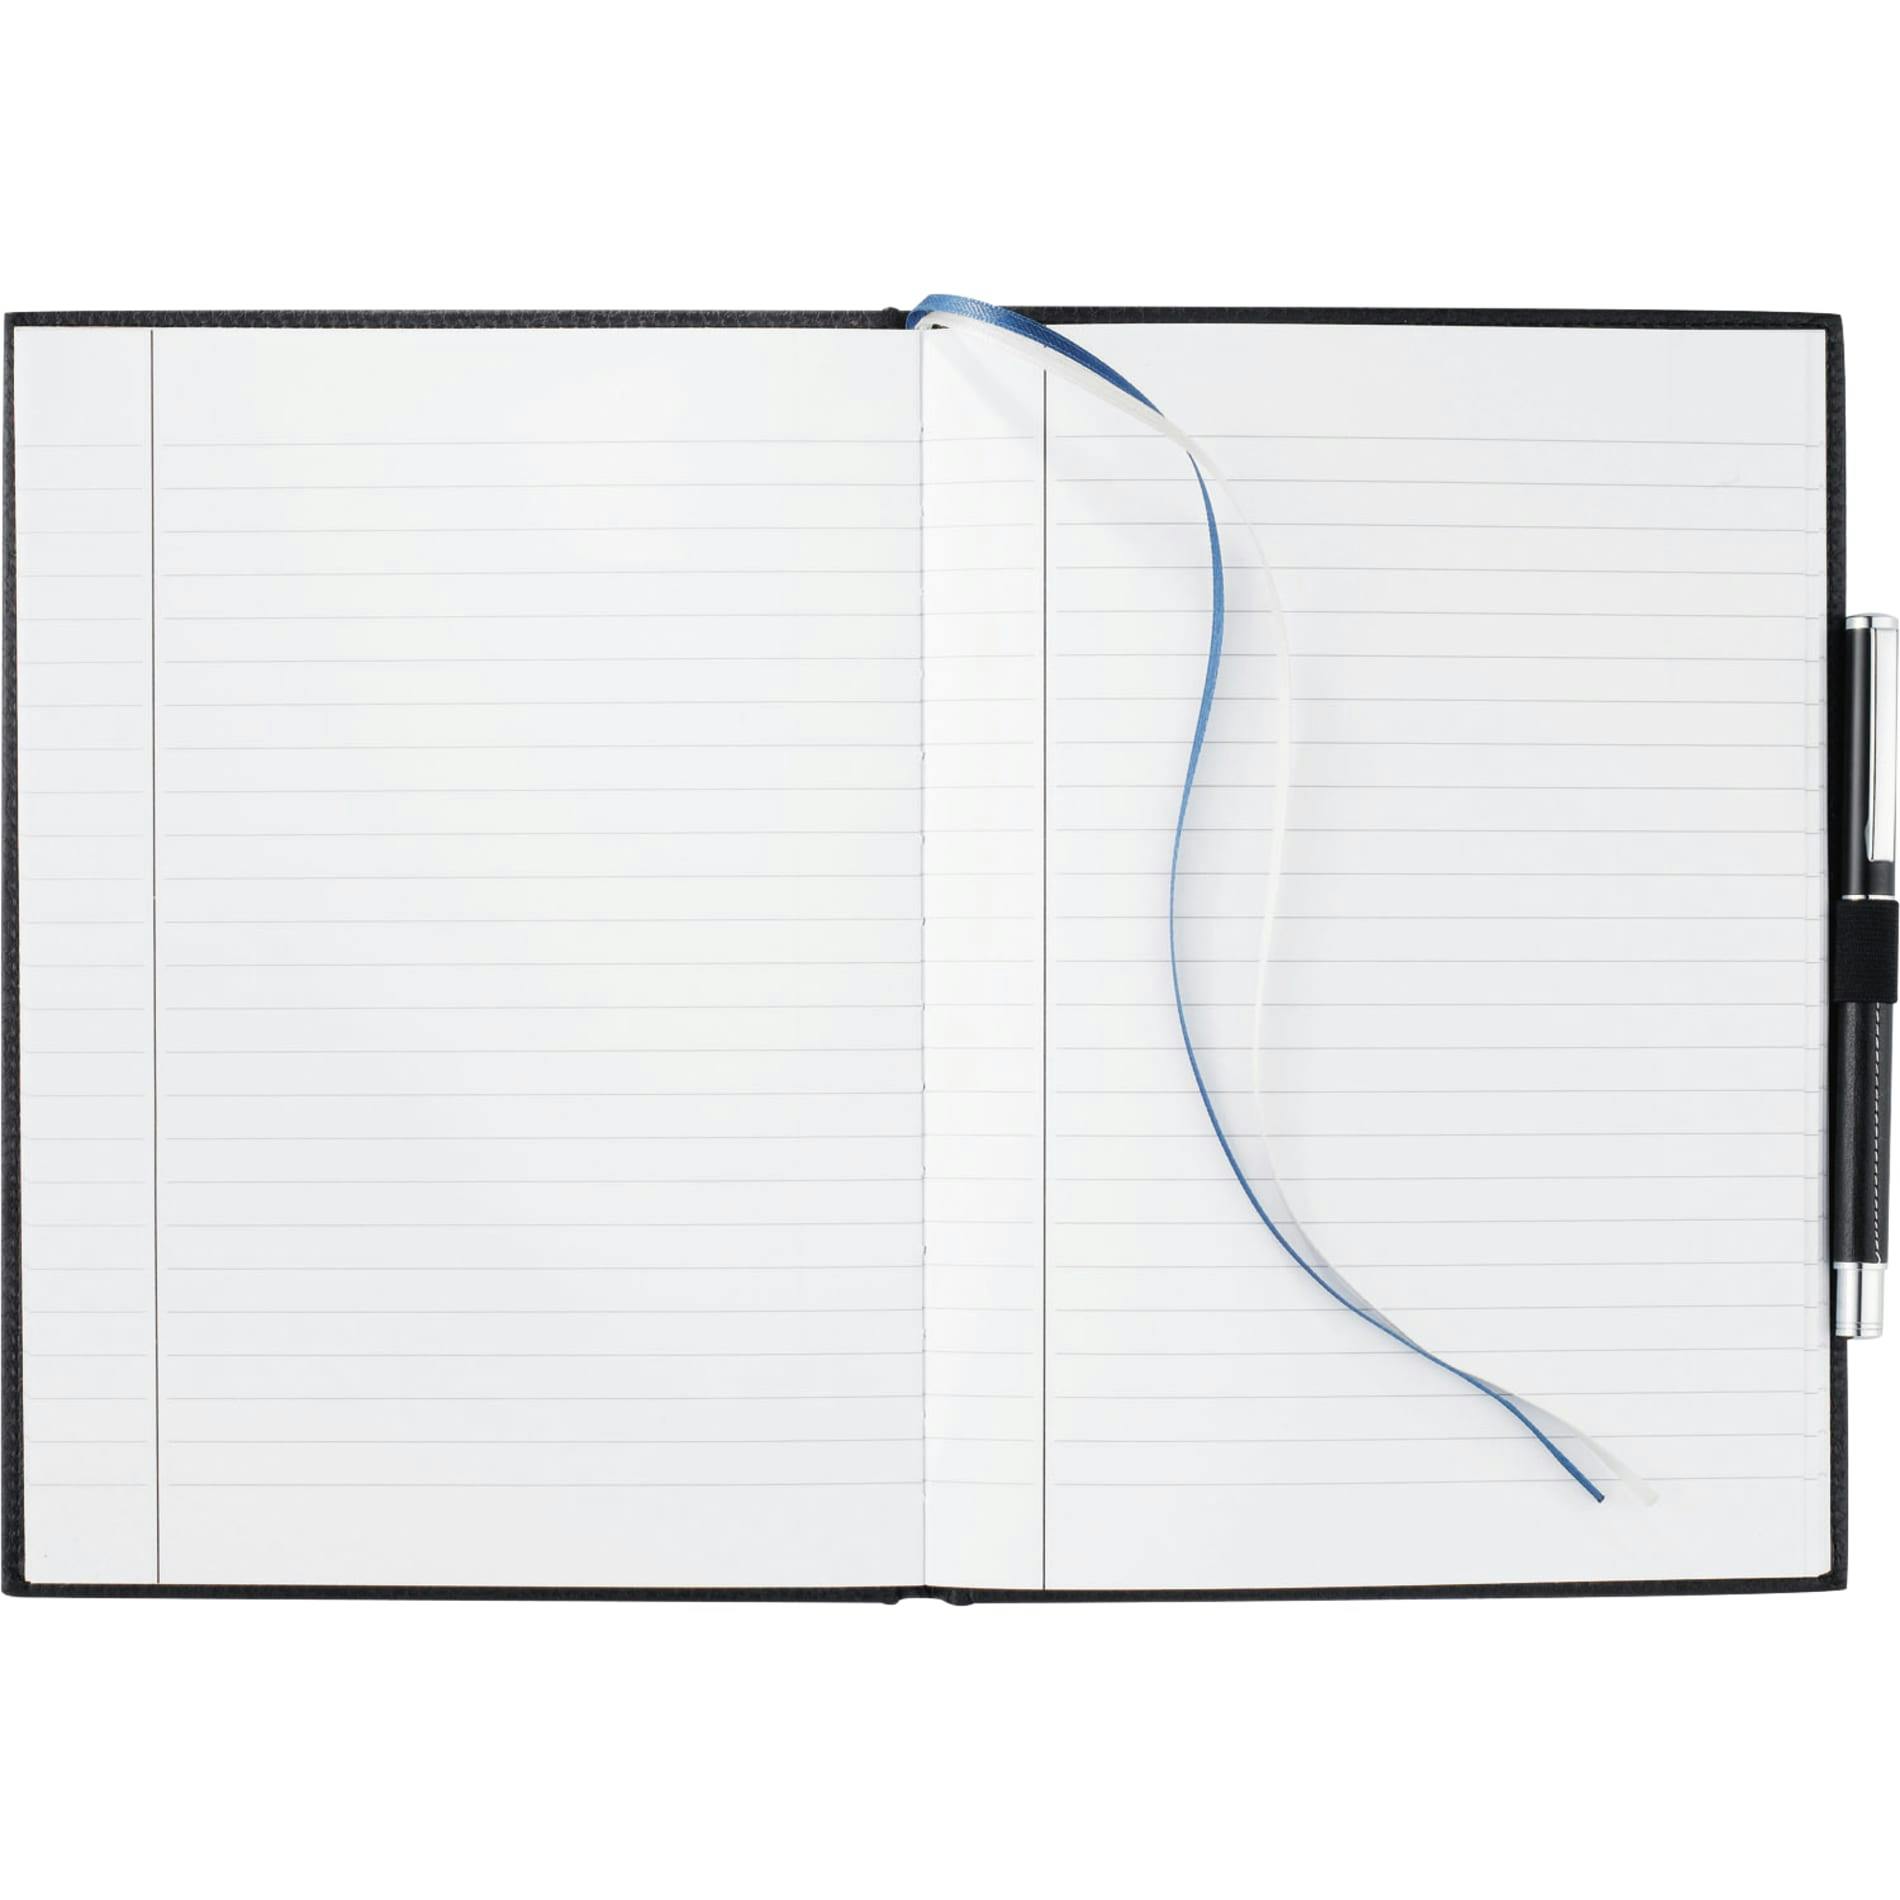 7" x 10" Vicenza Large Bound JournalBook® - additional Image 2